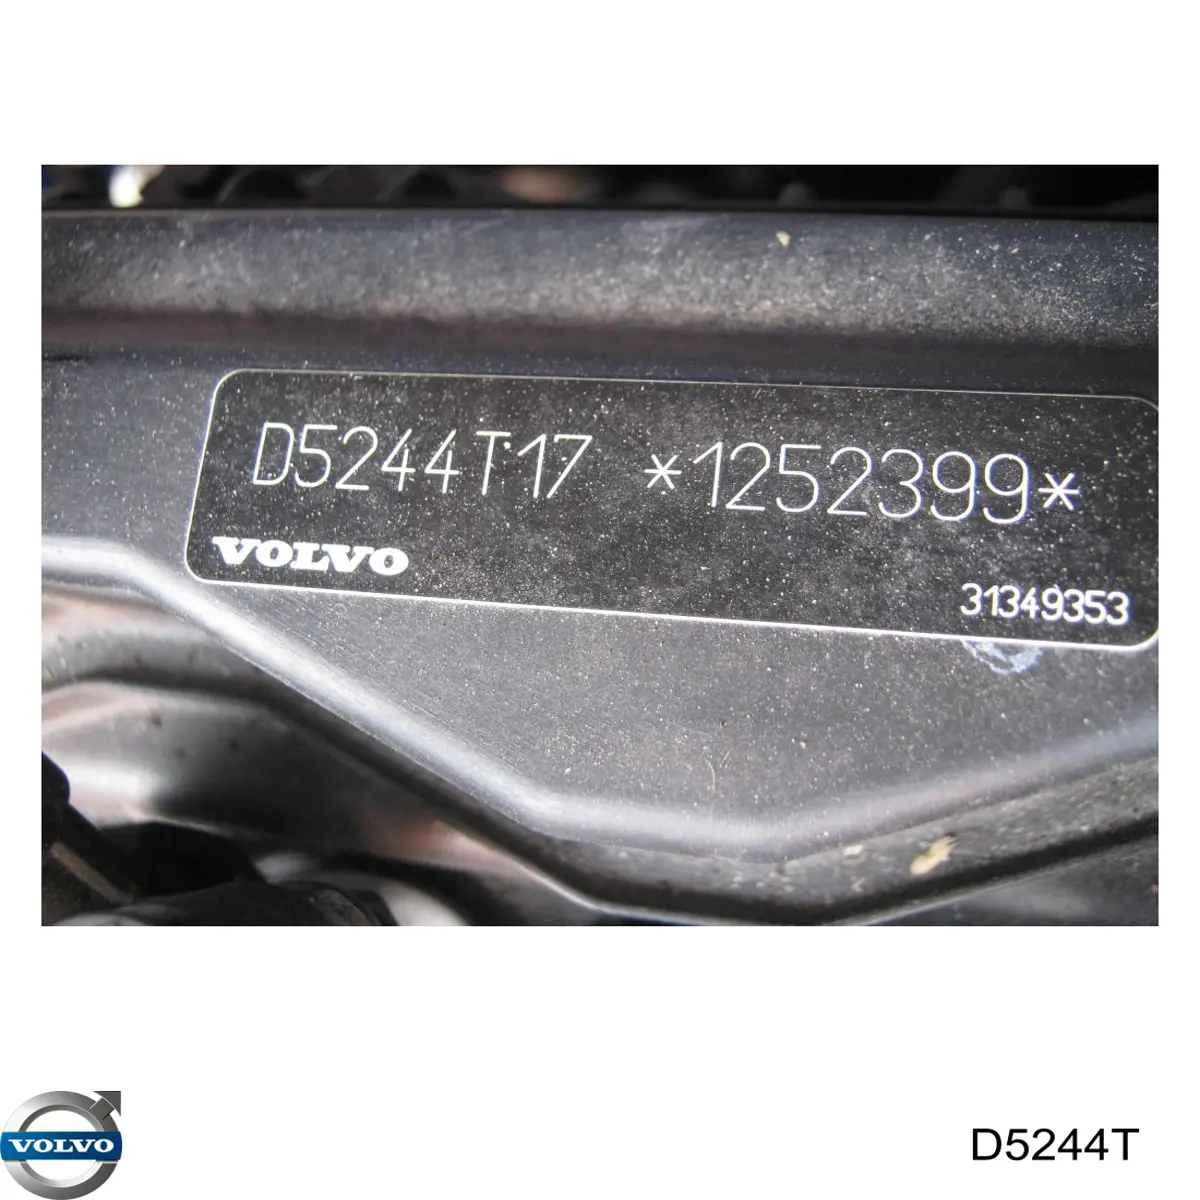 D5244T Volvo motor completo